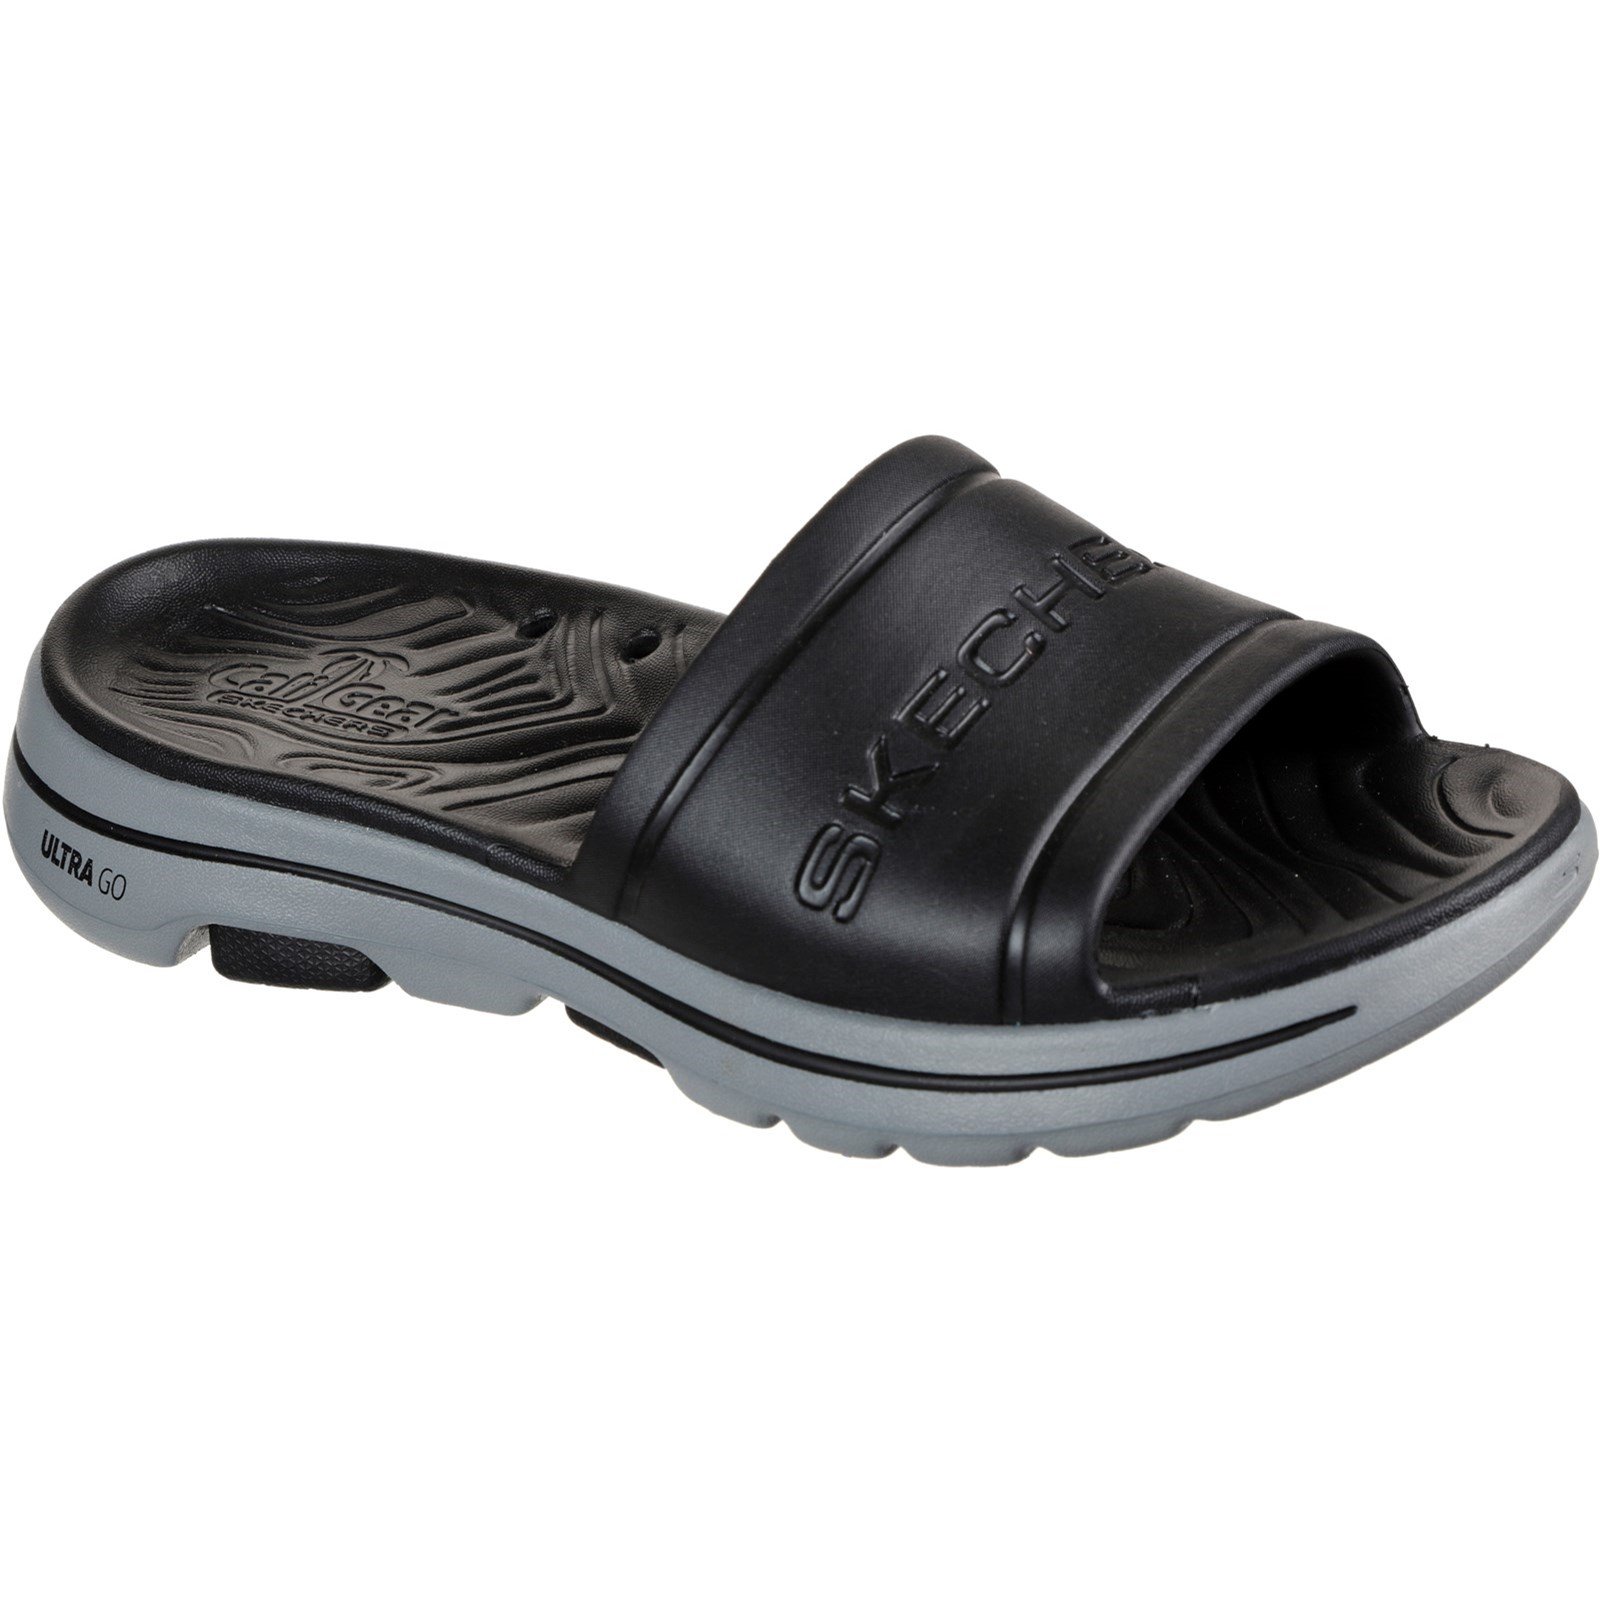 Skechers Men's Go Walk 5 Surfs Out Summer Sandal Various Colours 32207 - Black/Grey 7